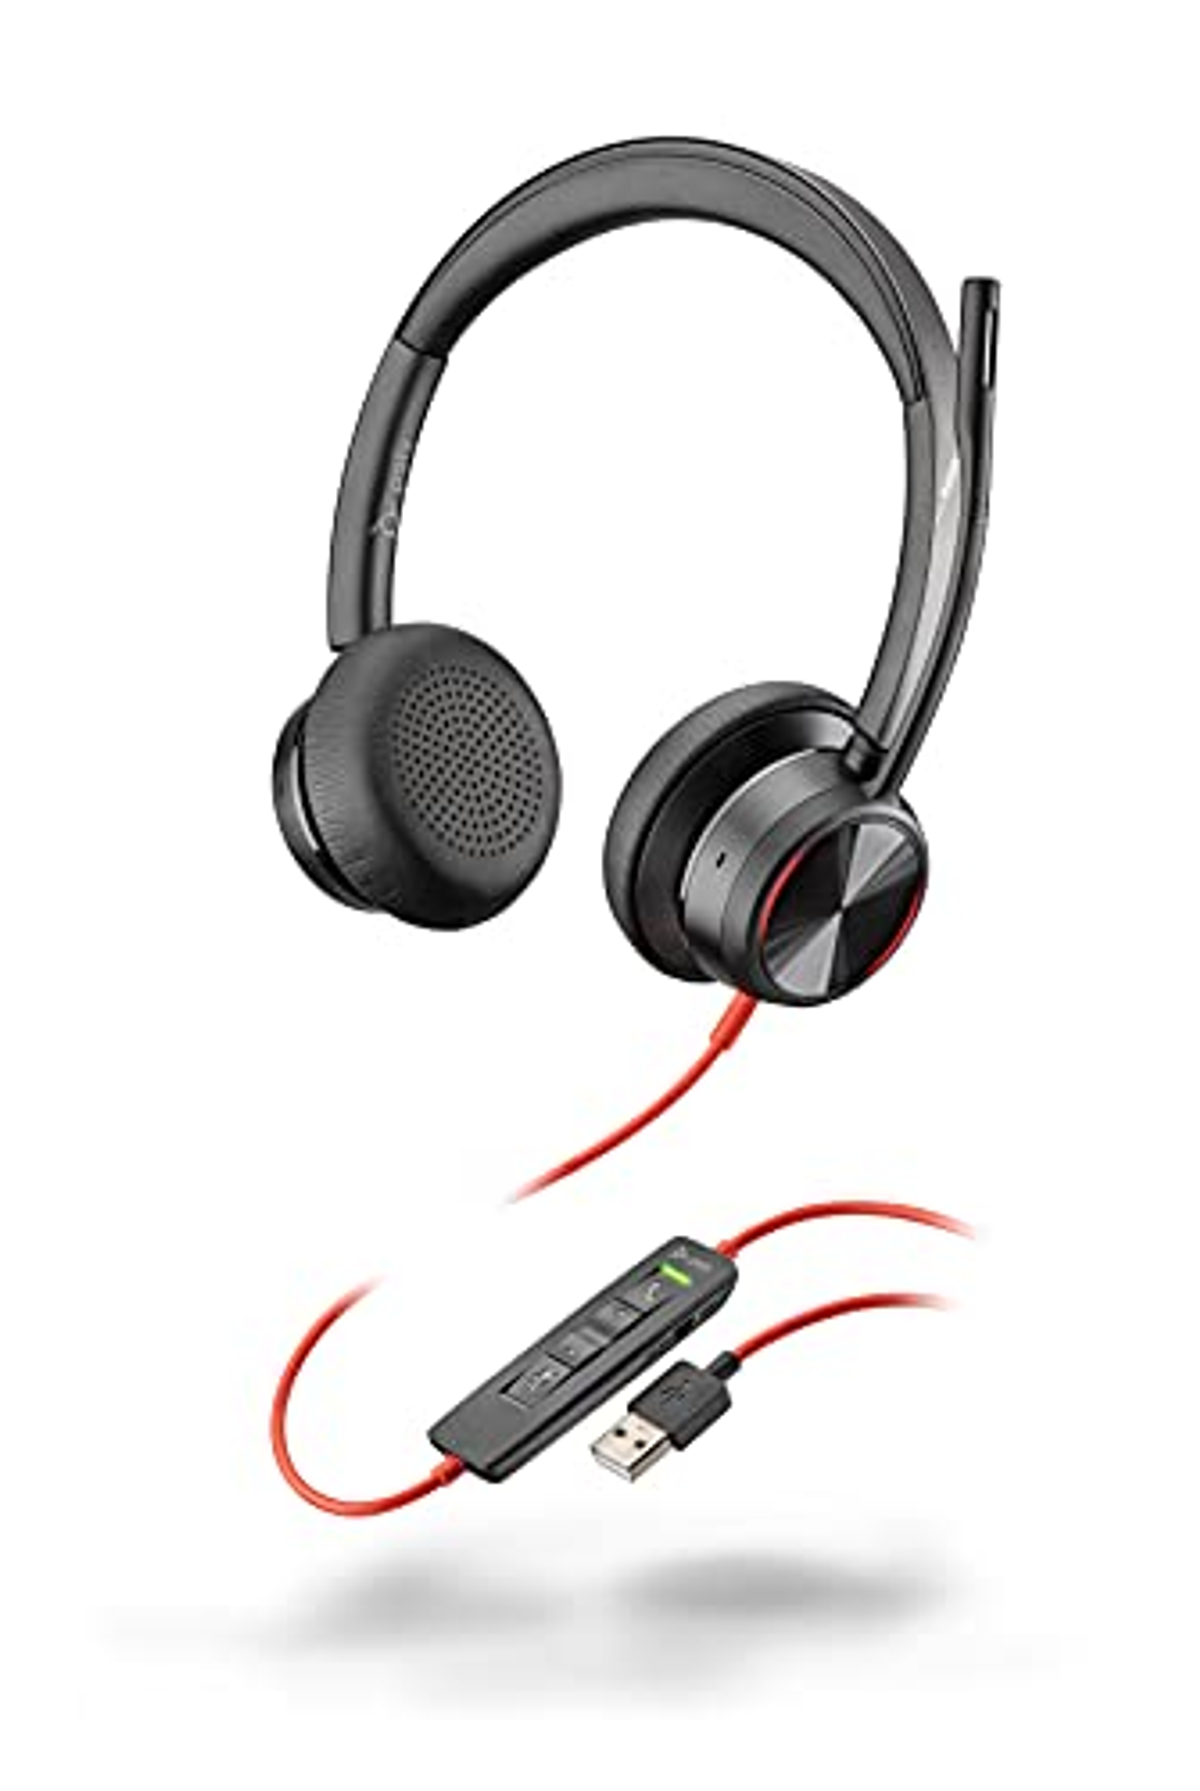 USB-A, 214406-01 Schwarz BLACKWIRE 8225 Headset POLY On-ear